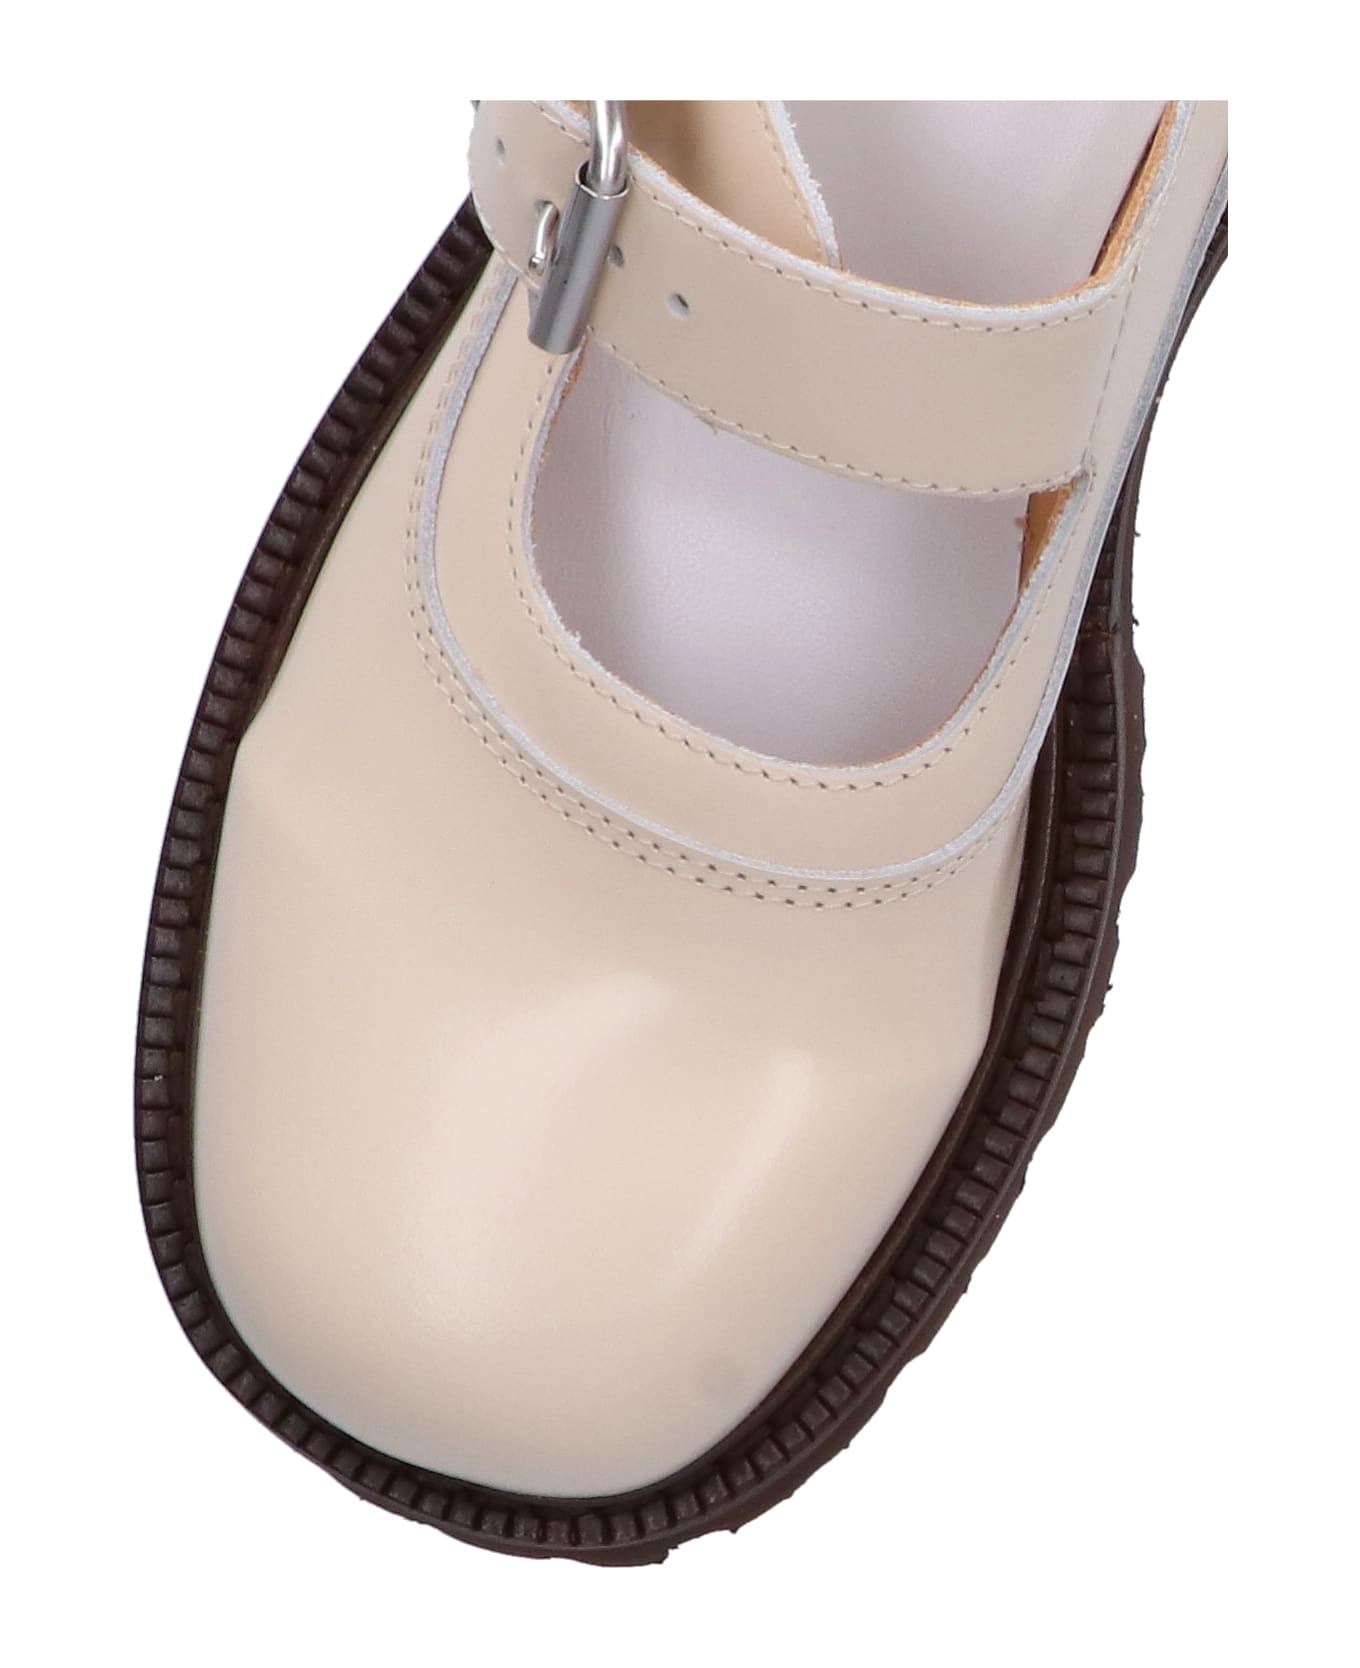 MM6 Maison Margiela Flat Shoes - Cream ハイヒール